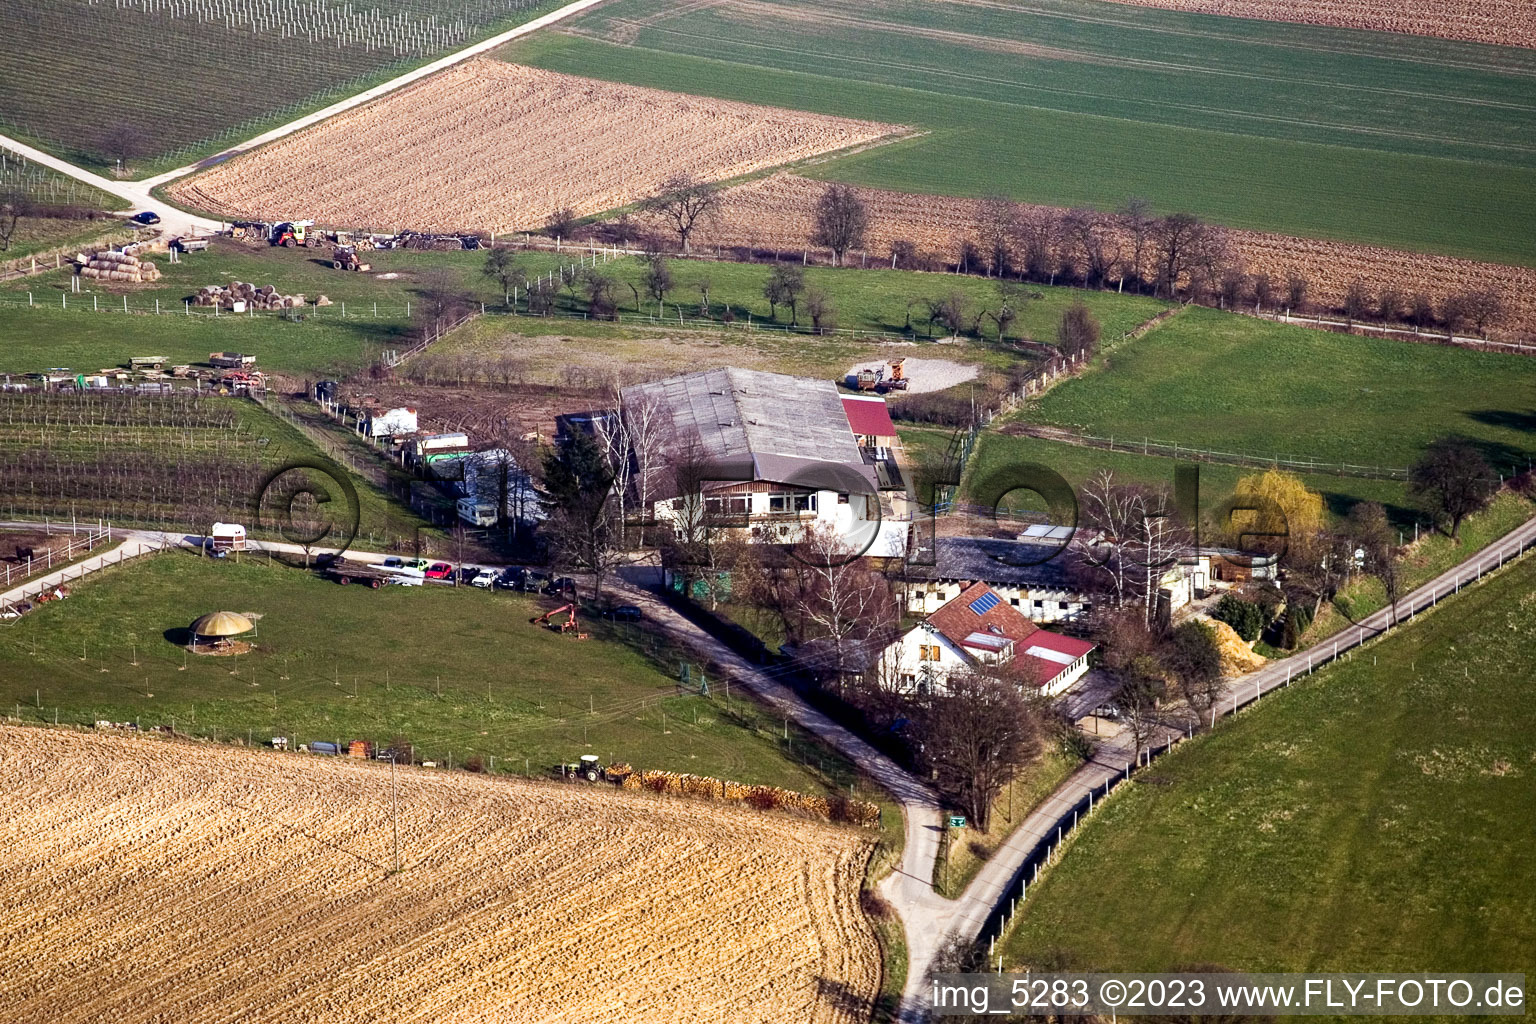 Heidebrunnerhof horse farm in Oberotterbach in the state Rhineland-Palatinate, Germany